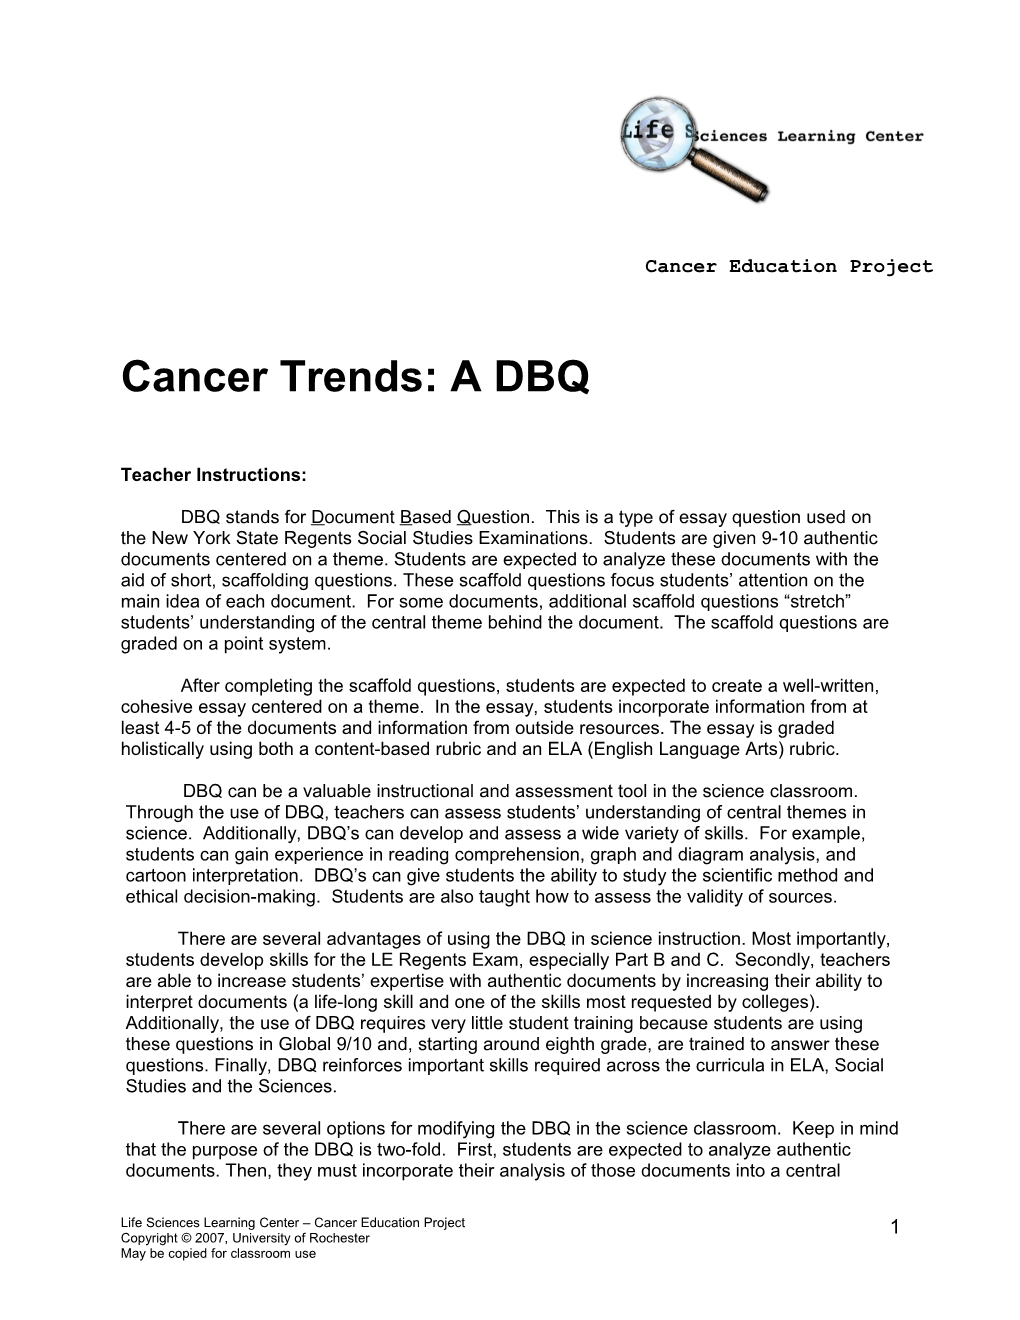 Cancer Trends: a DBQ